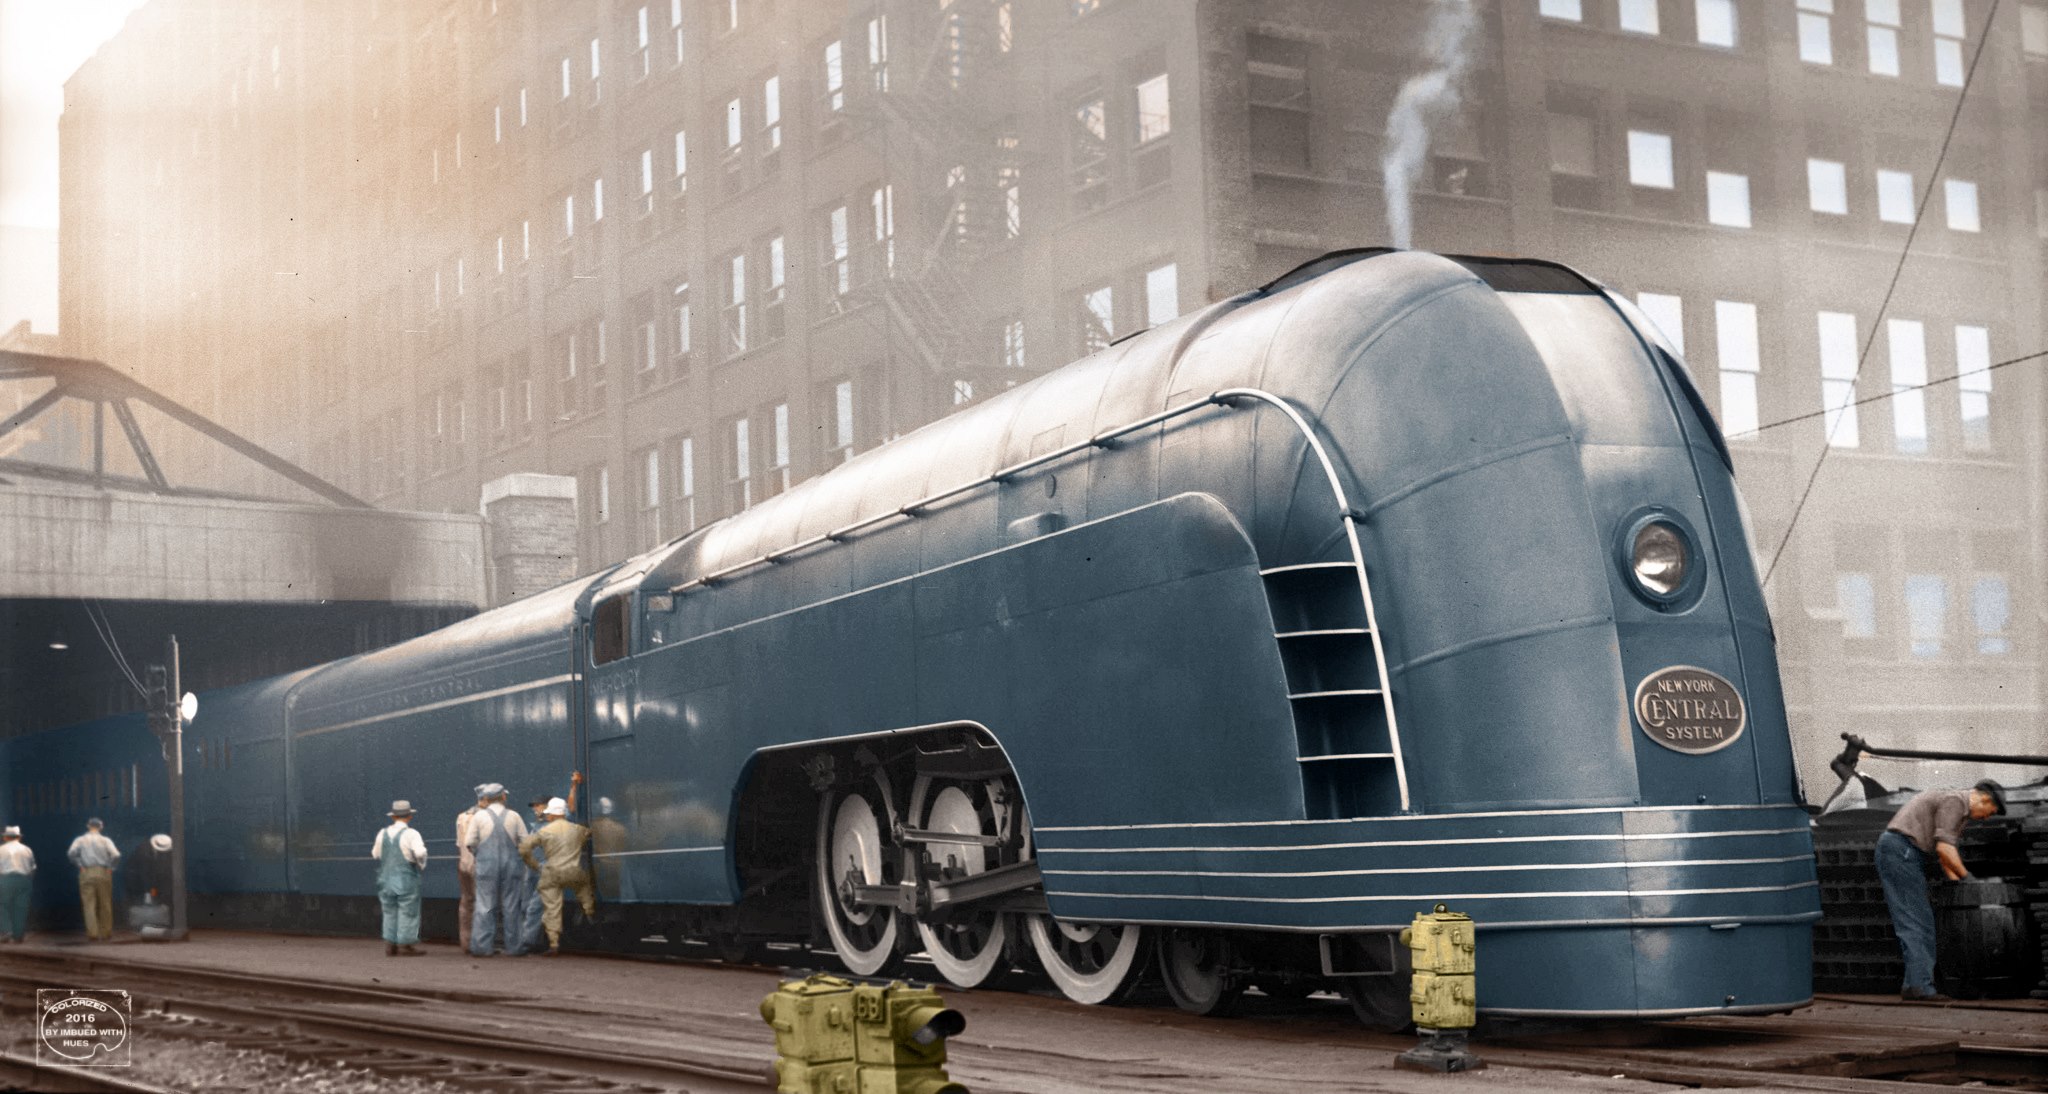 1936 - Mercury Steam Locomotive in New York Central Railroad